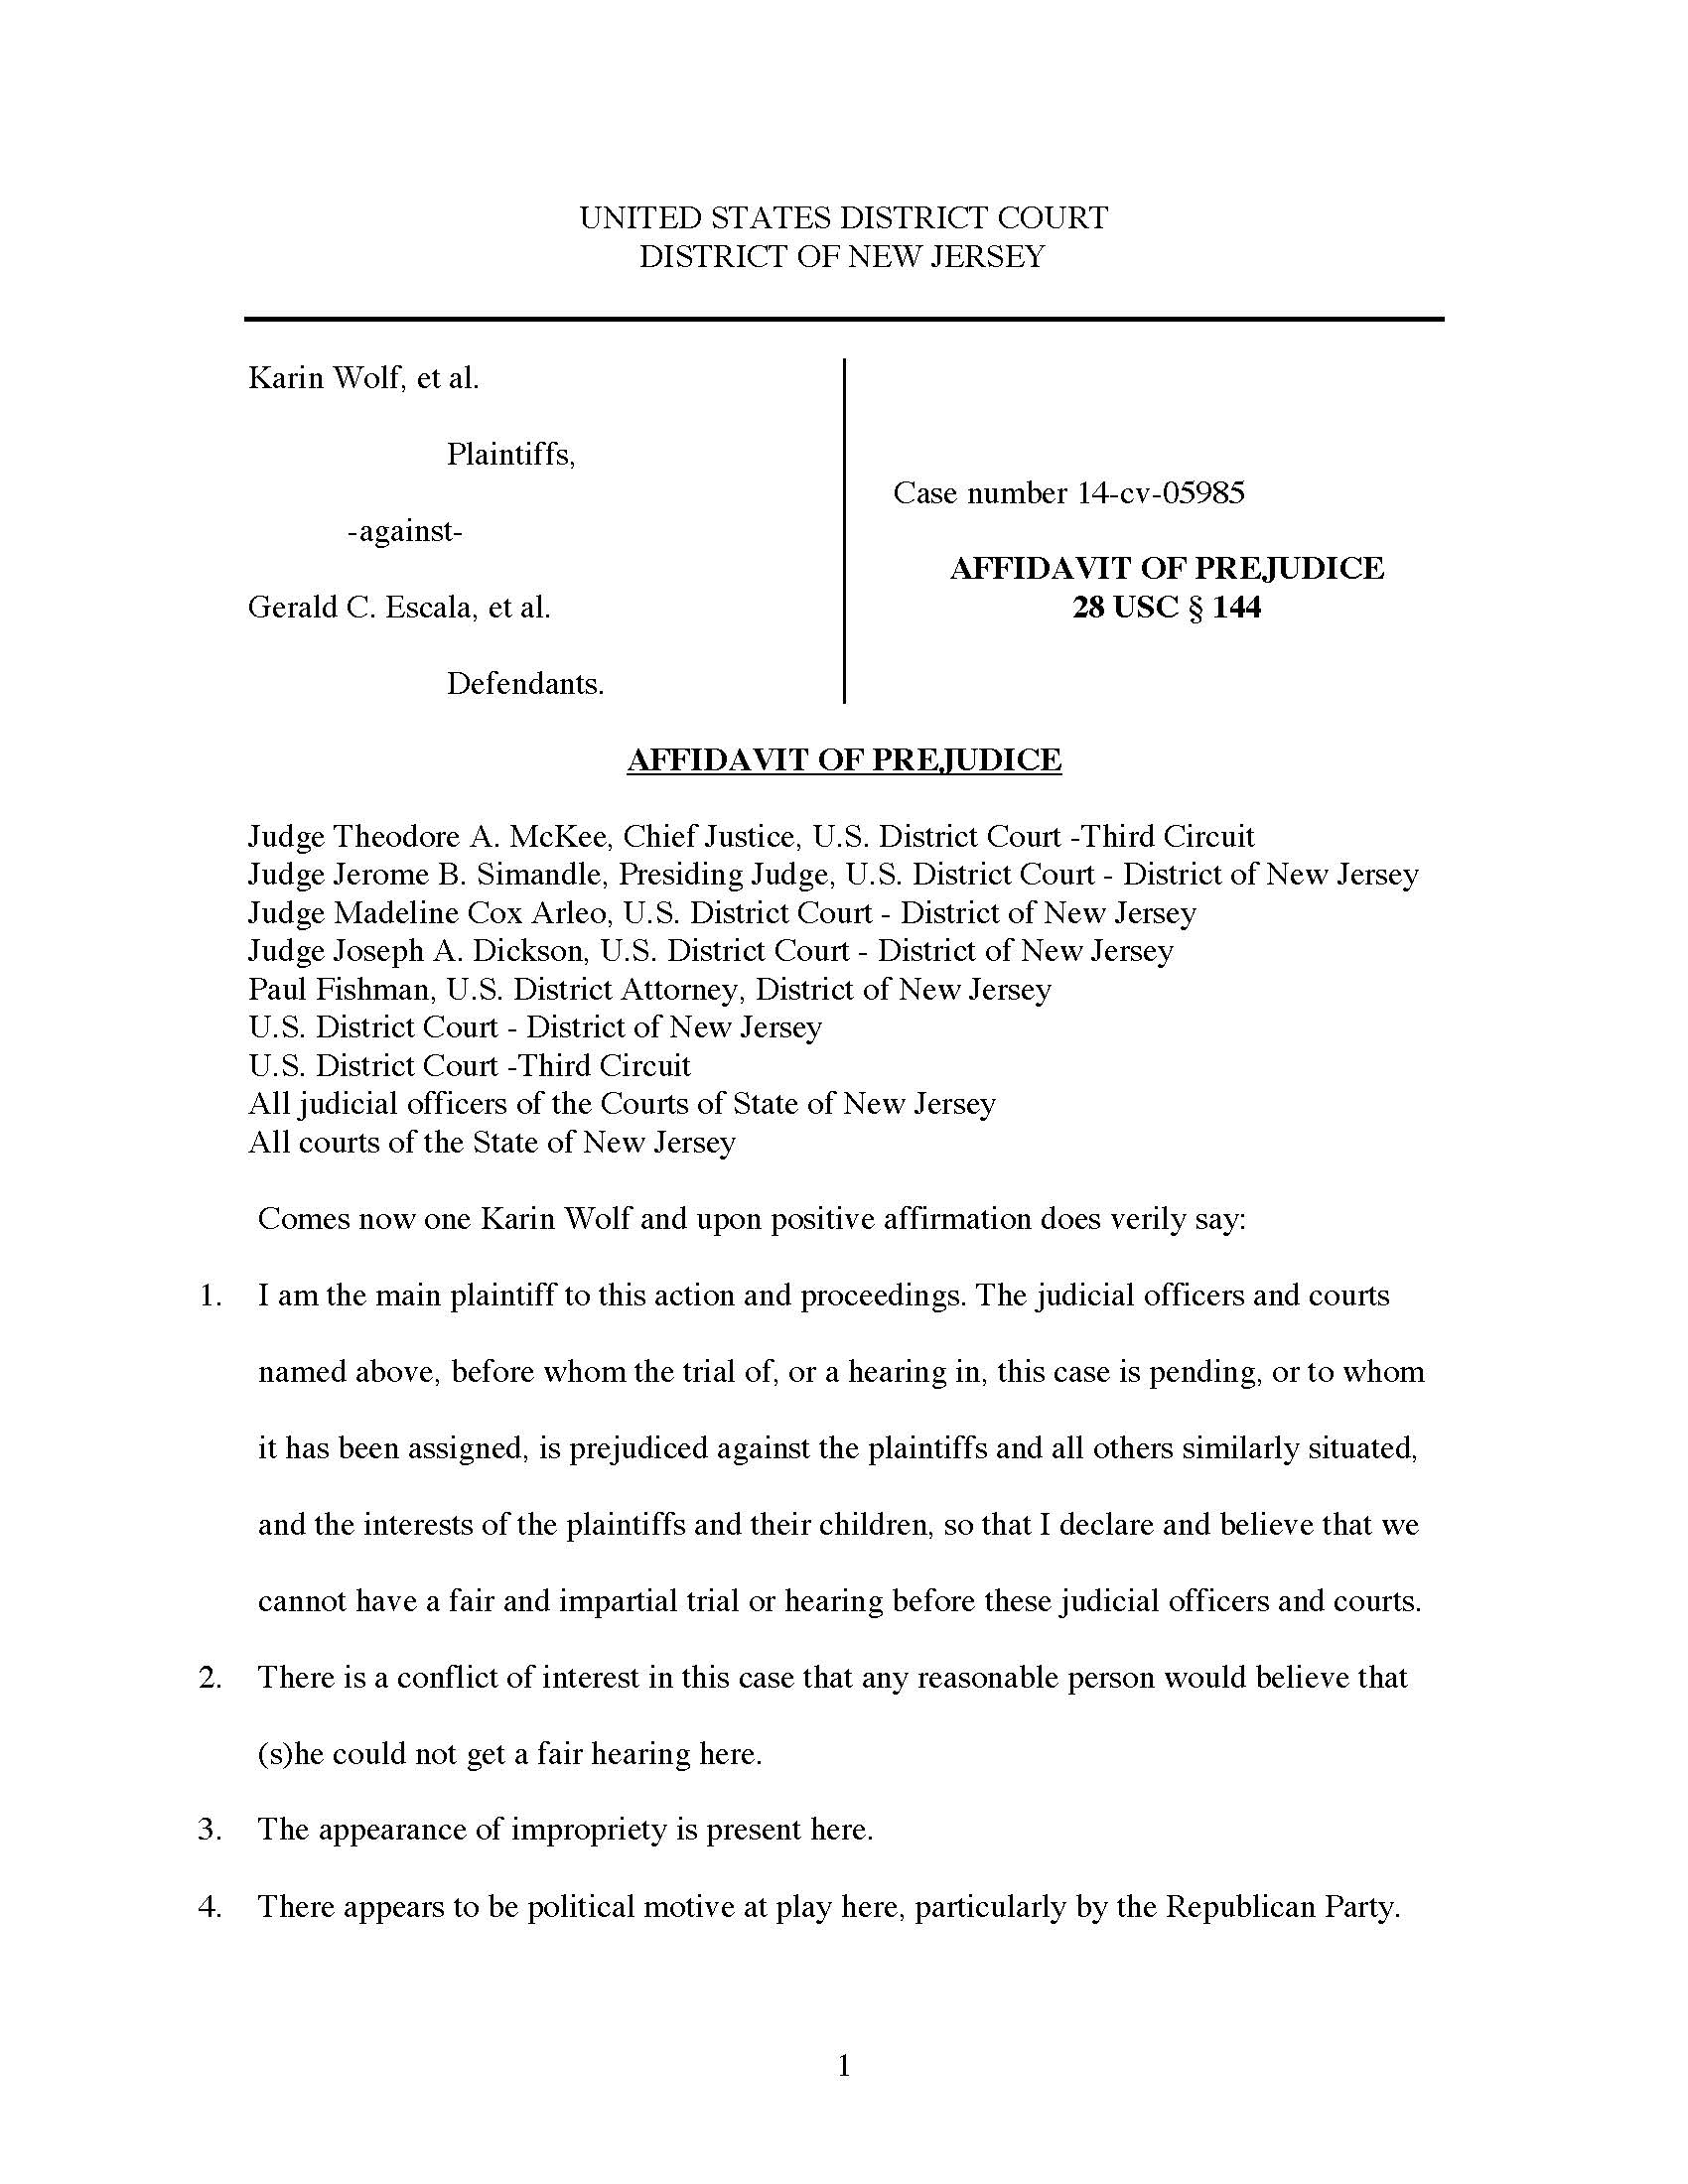 Karin Wolf files Affidavit of Prejudice in U.S. District Court, October 1, 2015 » The ...1700 x 2200